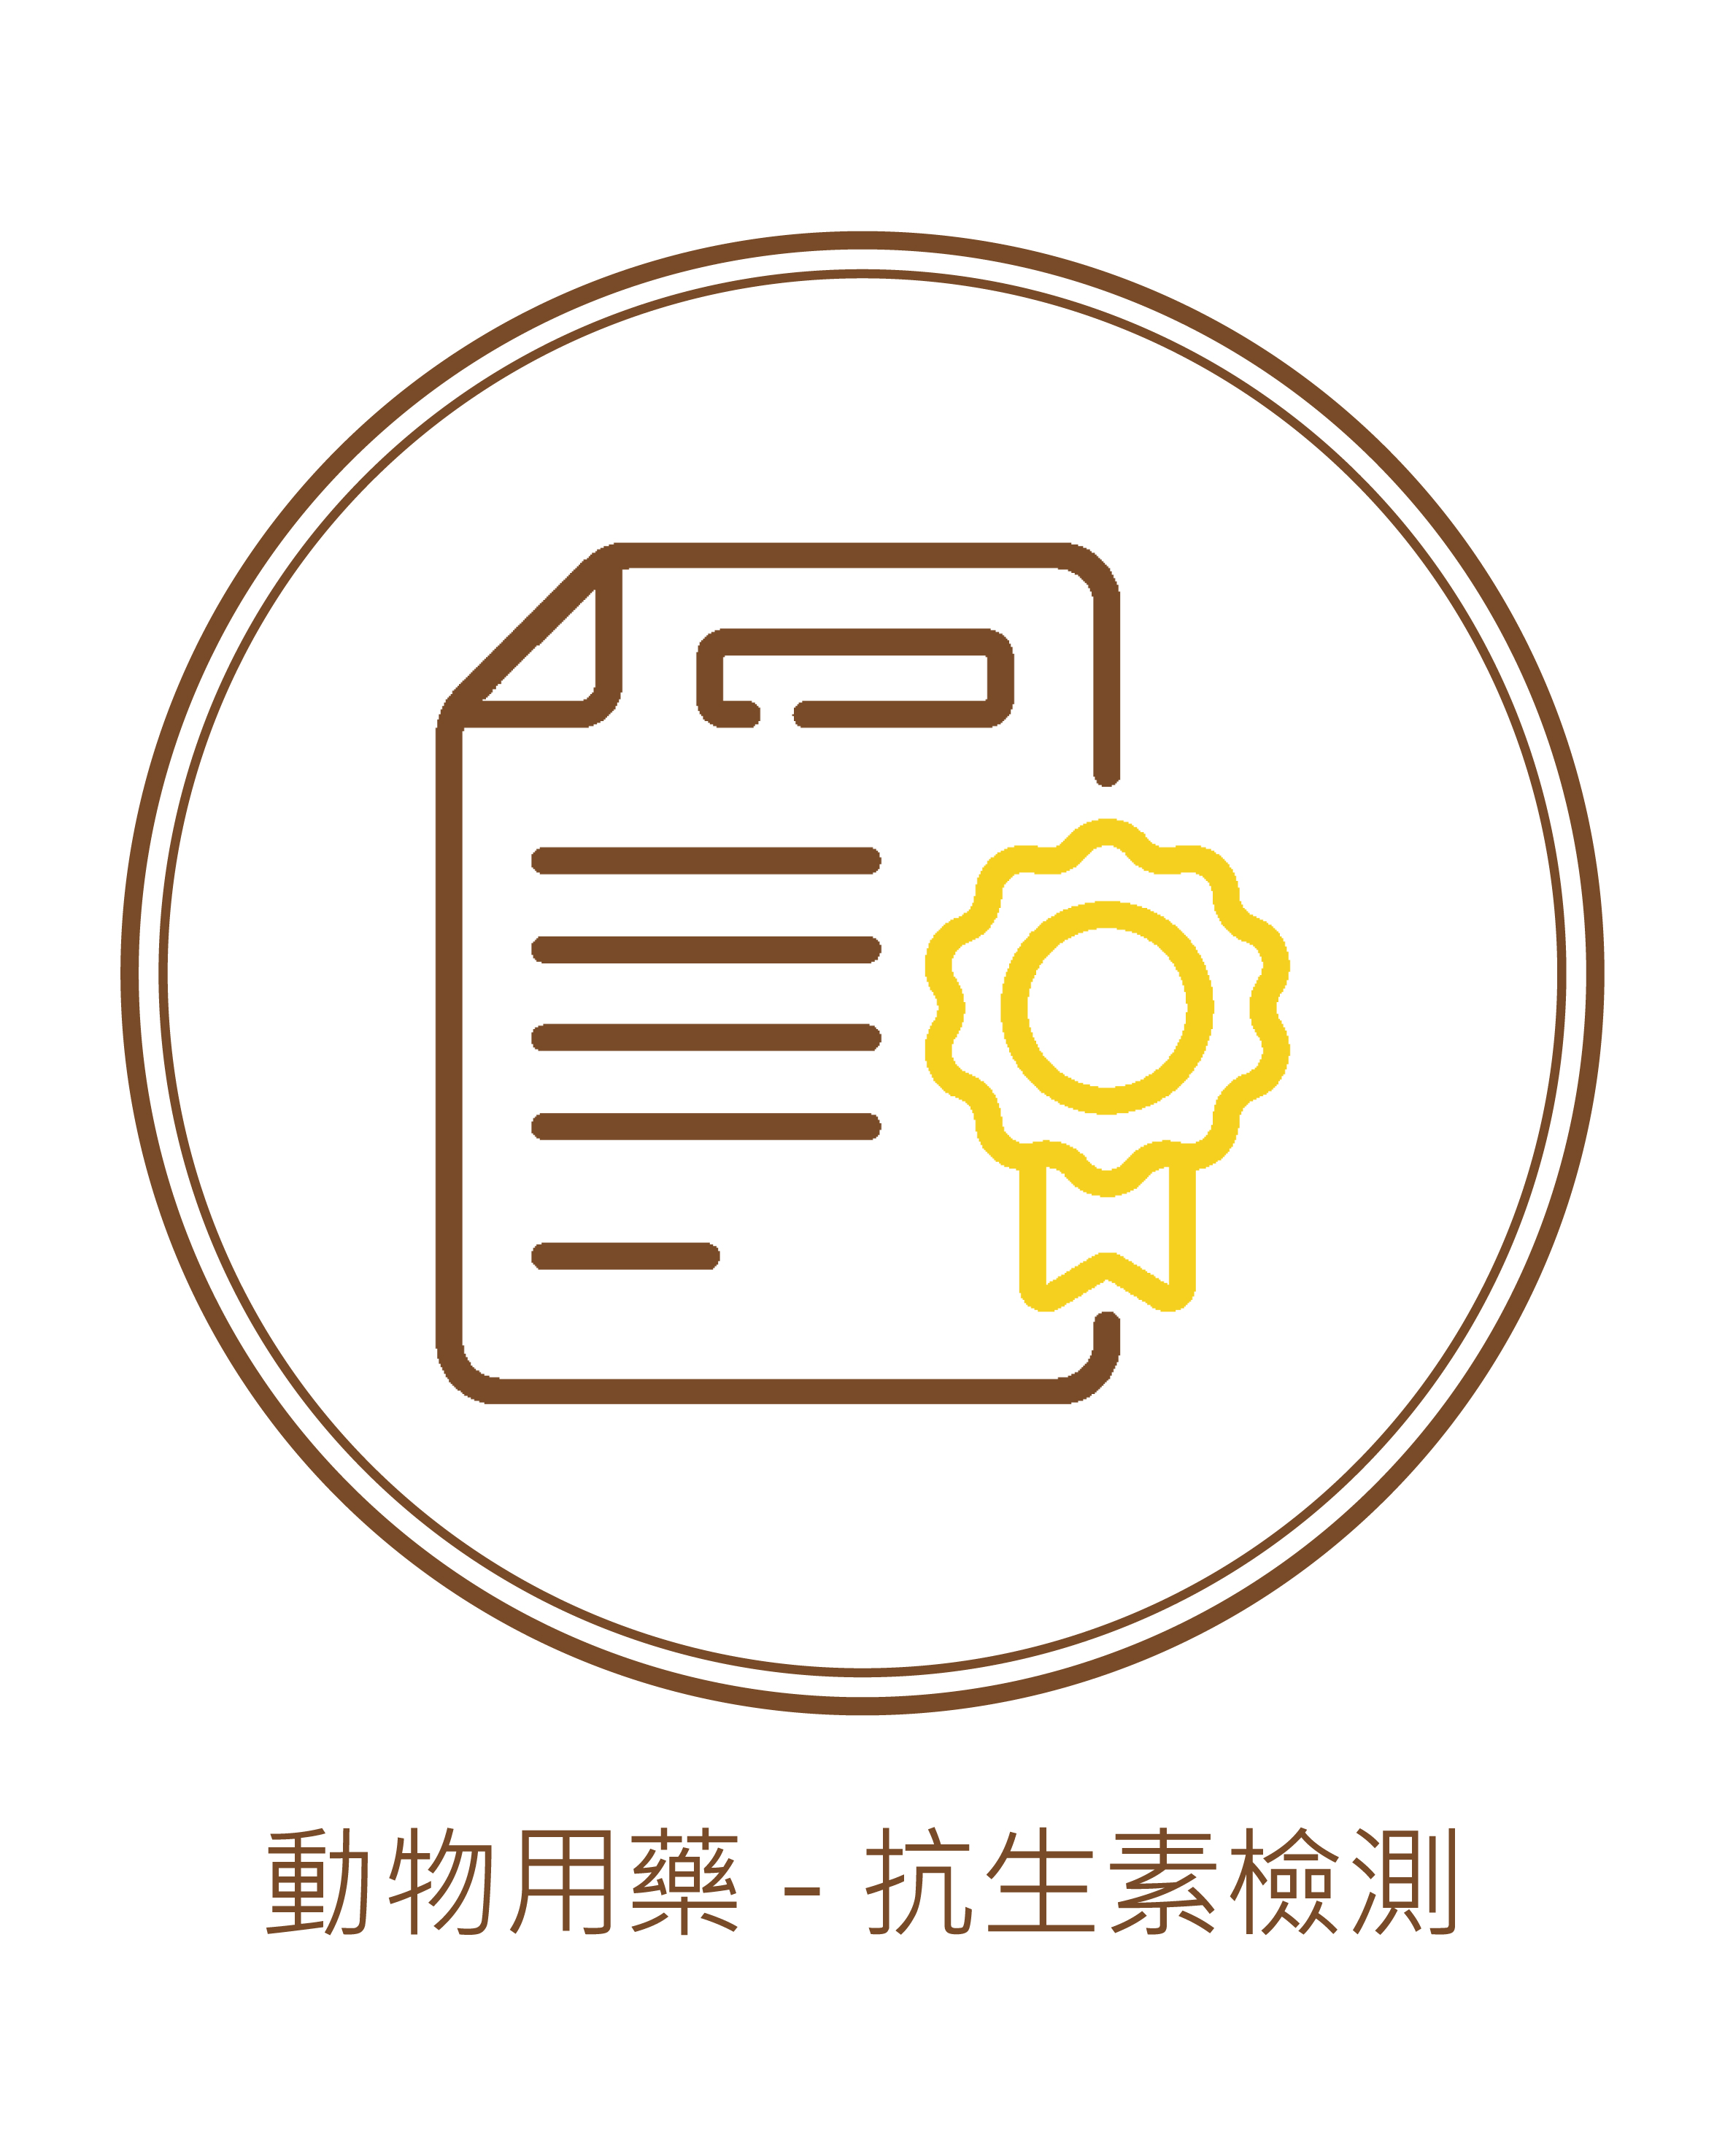 SGS certificate icon.jpg